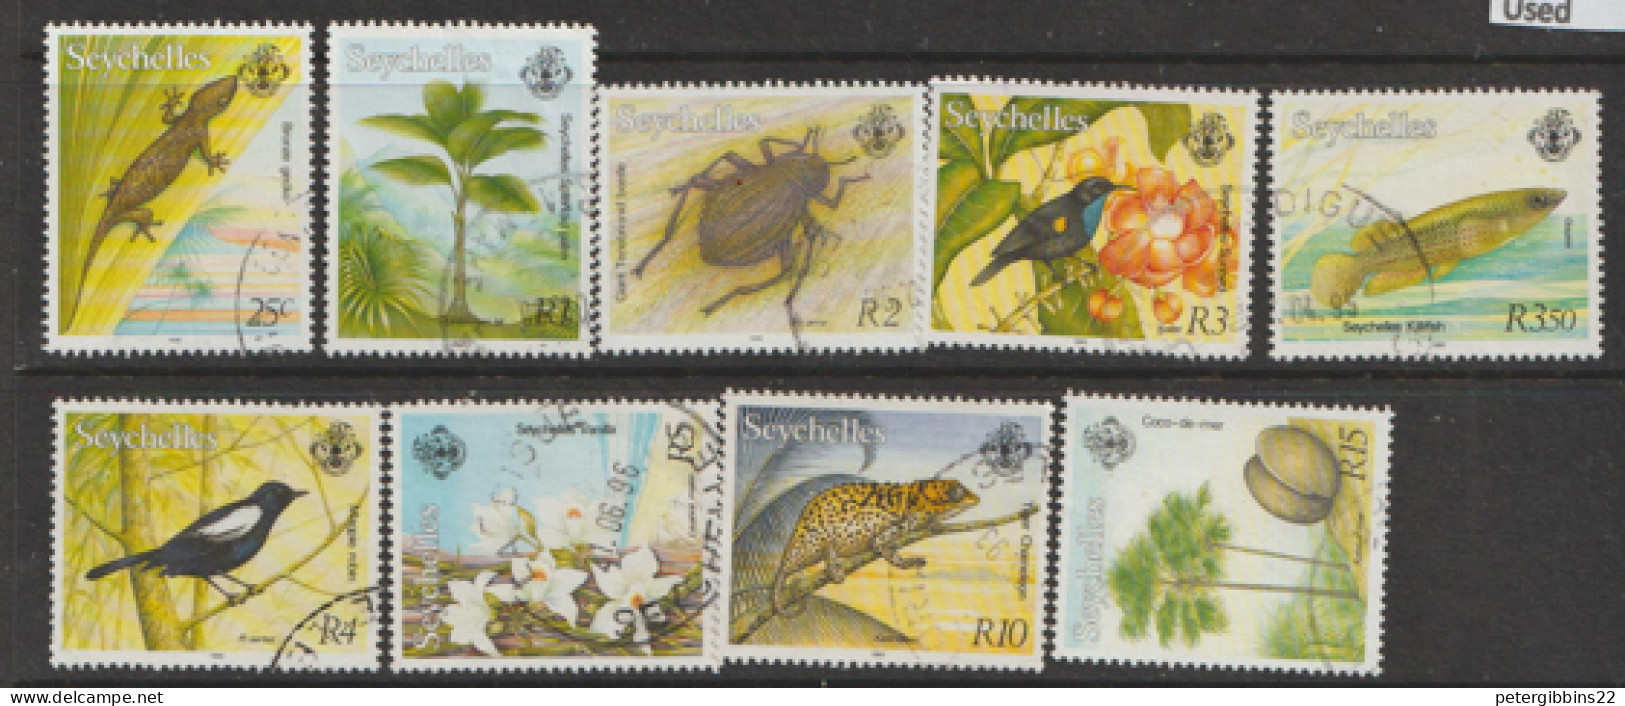 Seychelles 1993  Fauna And  Flora   Fine Used - Seychelles (1976-...)